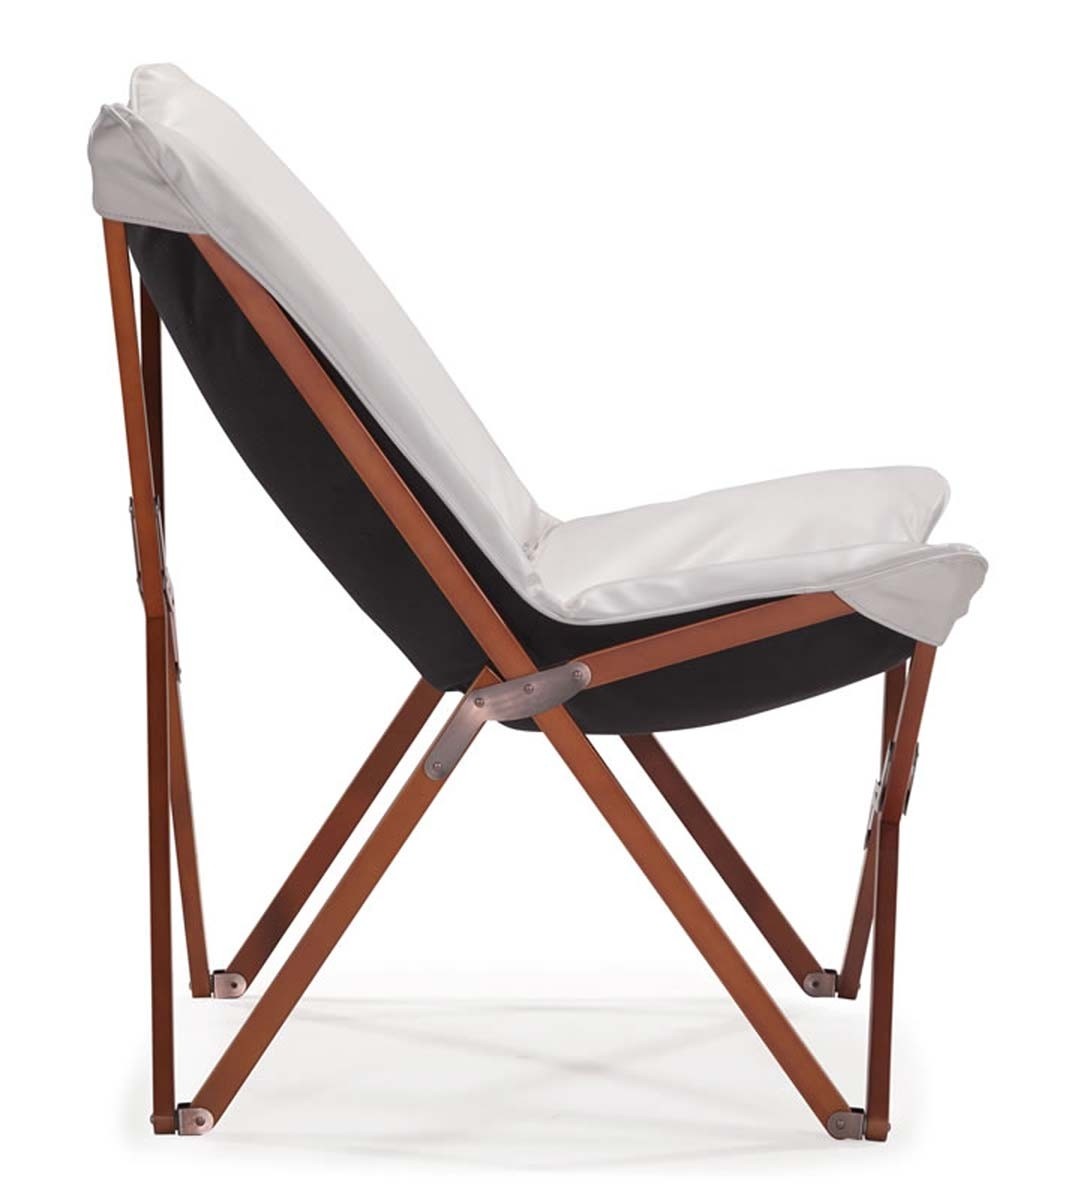 Modern folding chairs